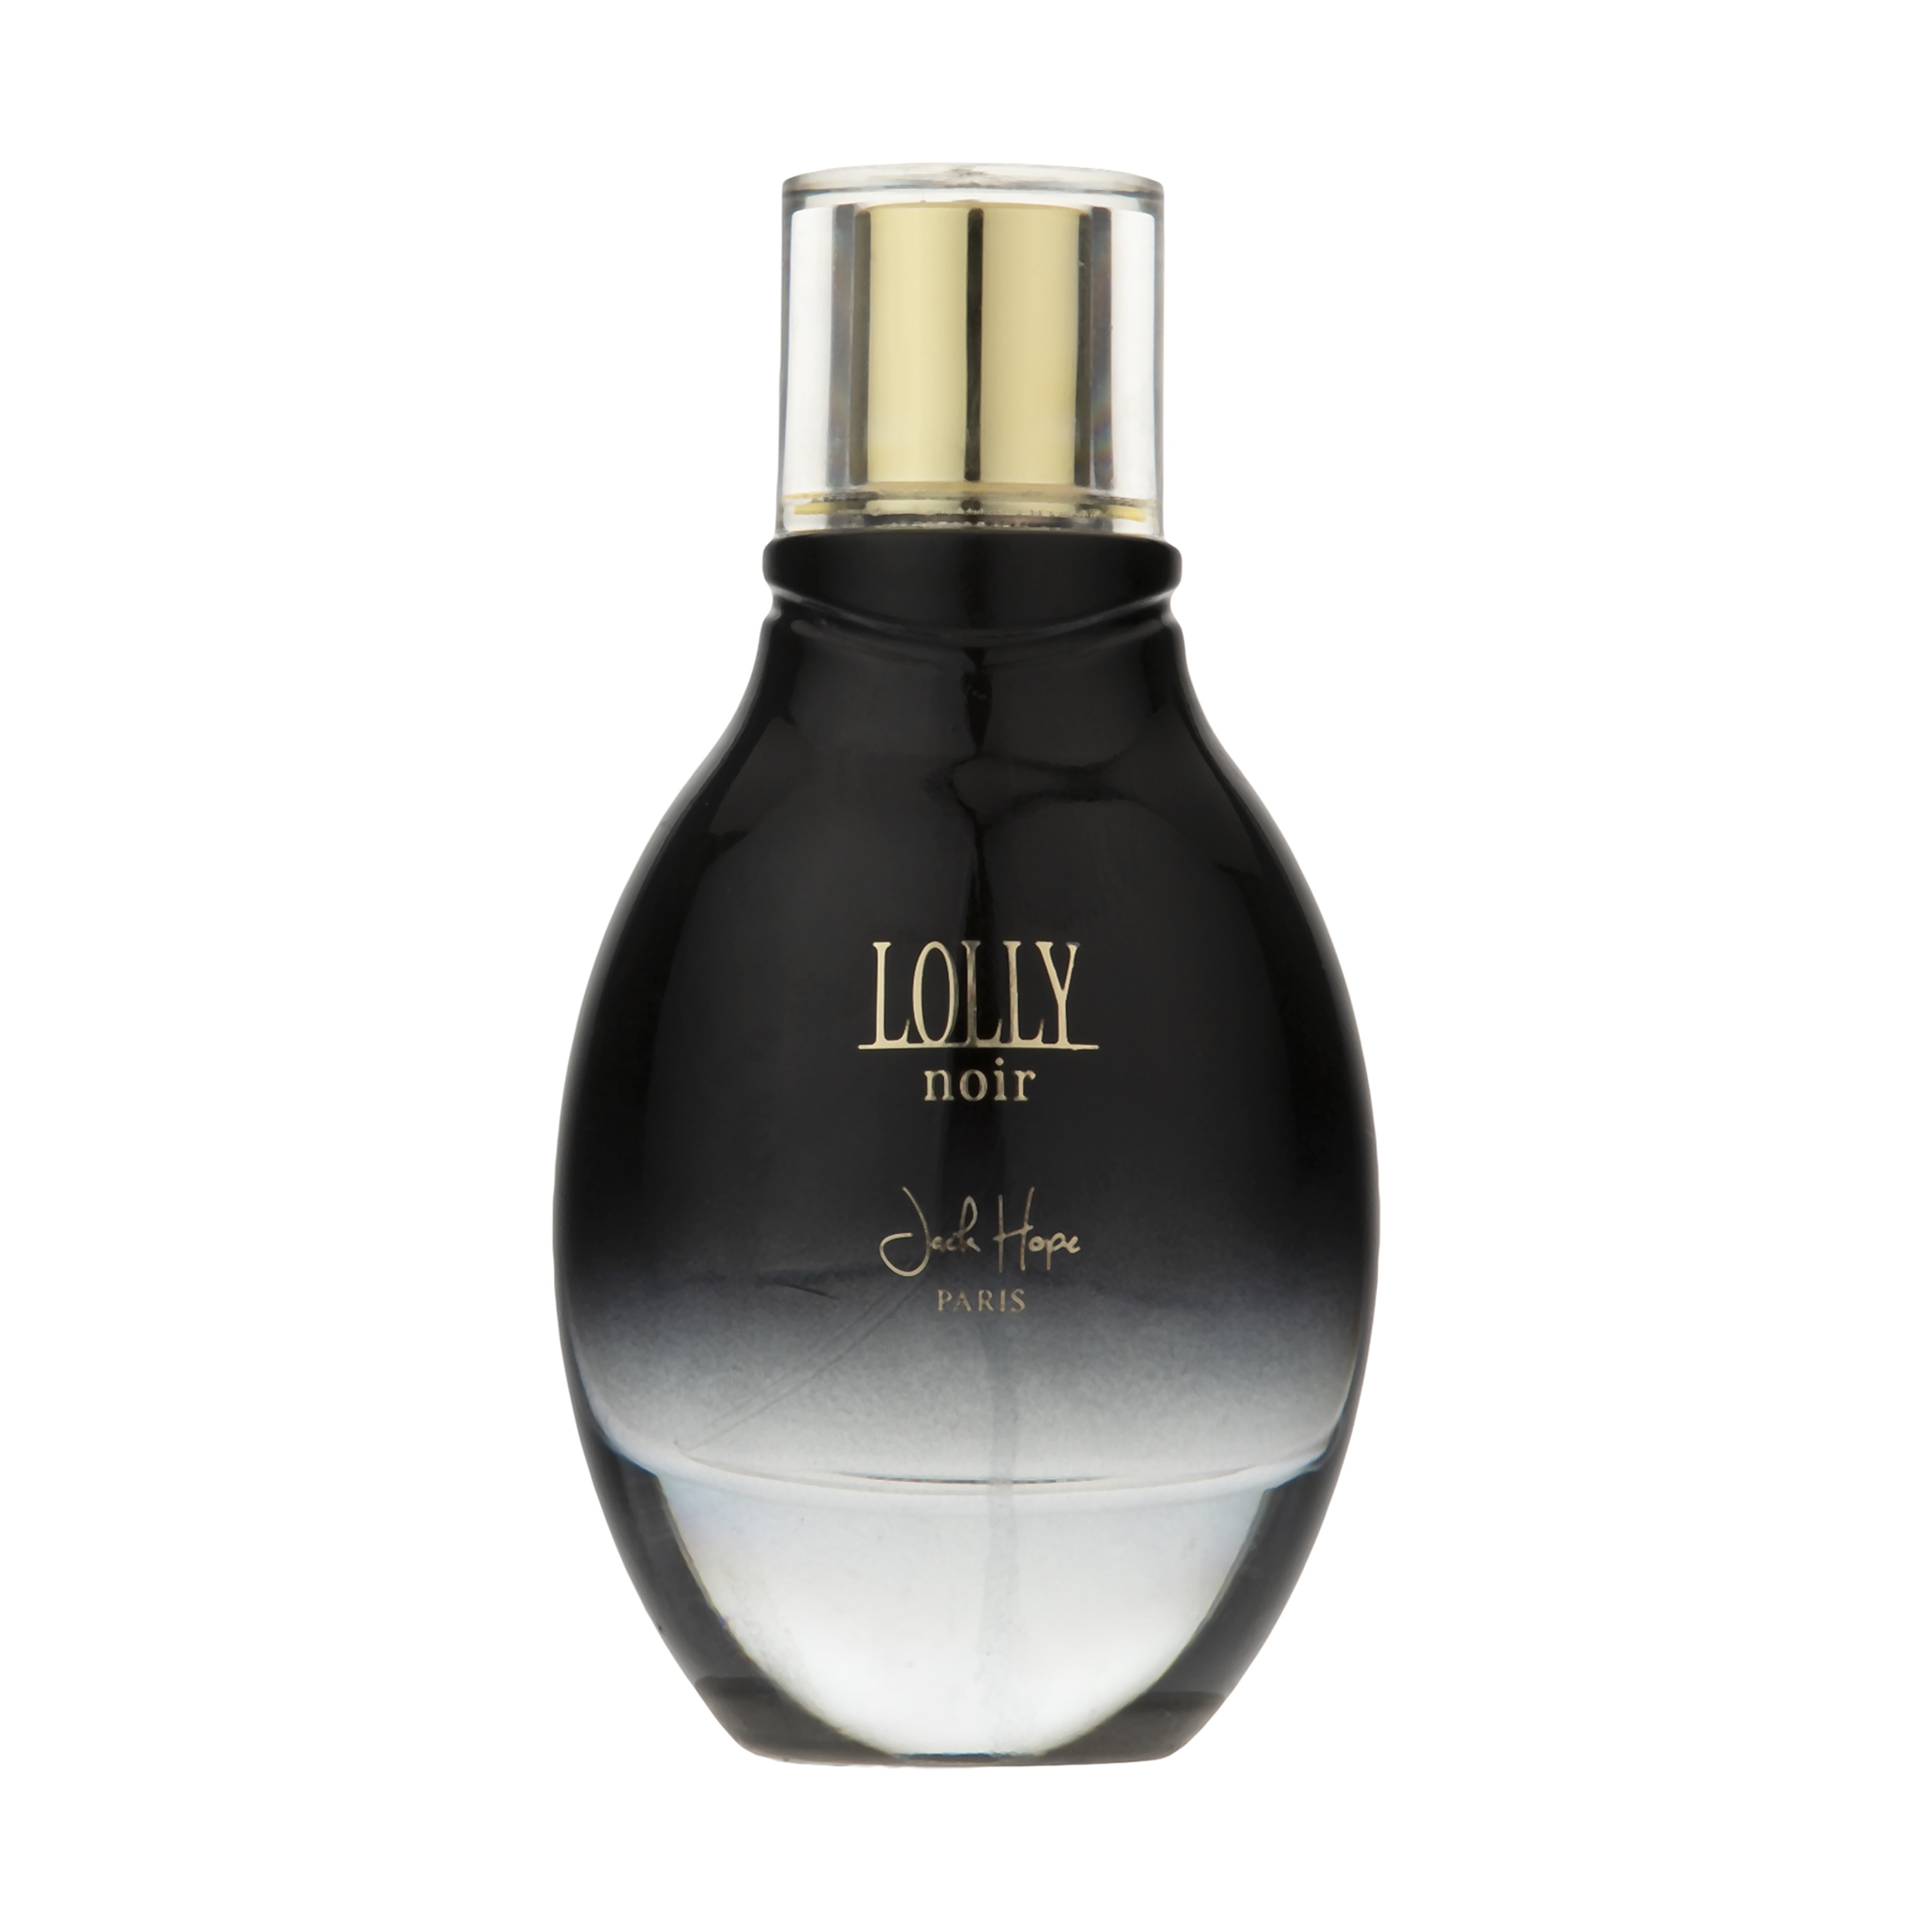 ادو پرفیوم زنانه جک هوپ مدل Lolly Noir حجم 100 میلی لیتر